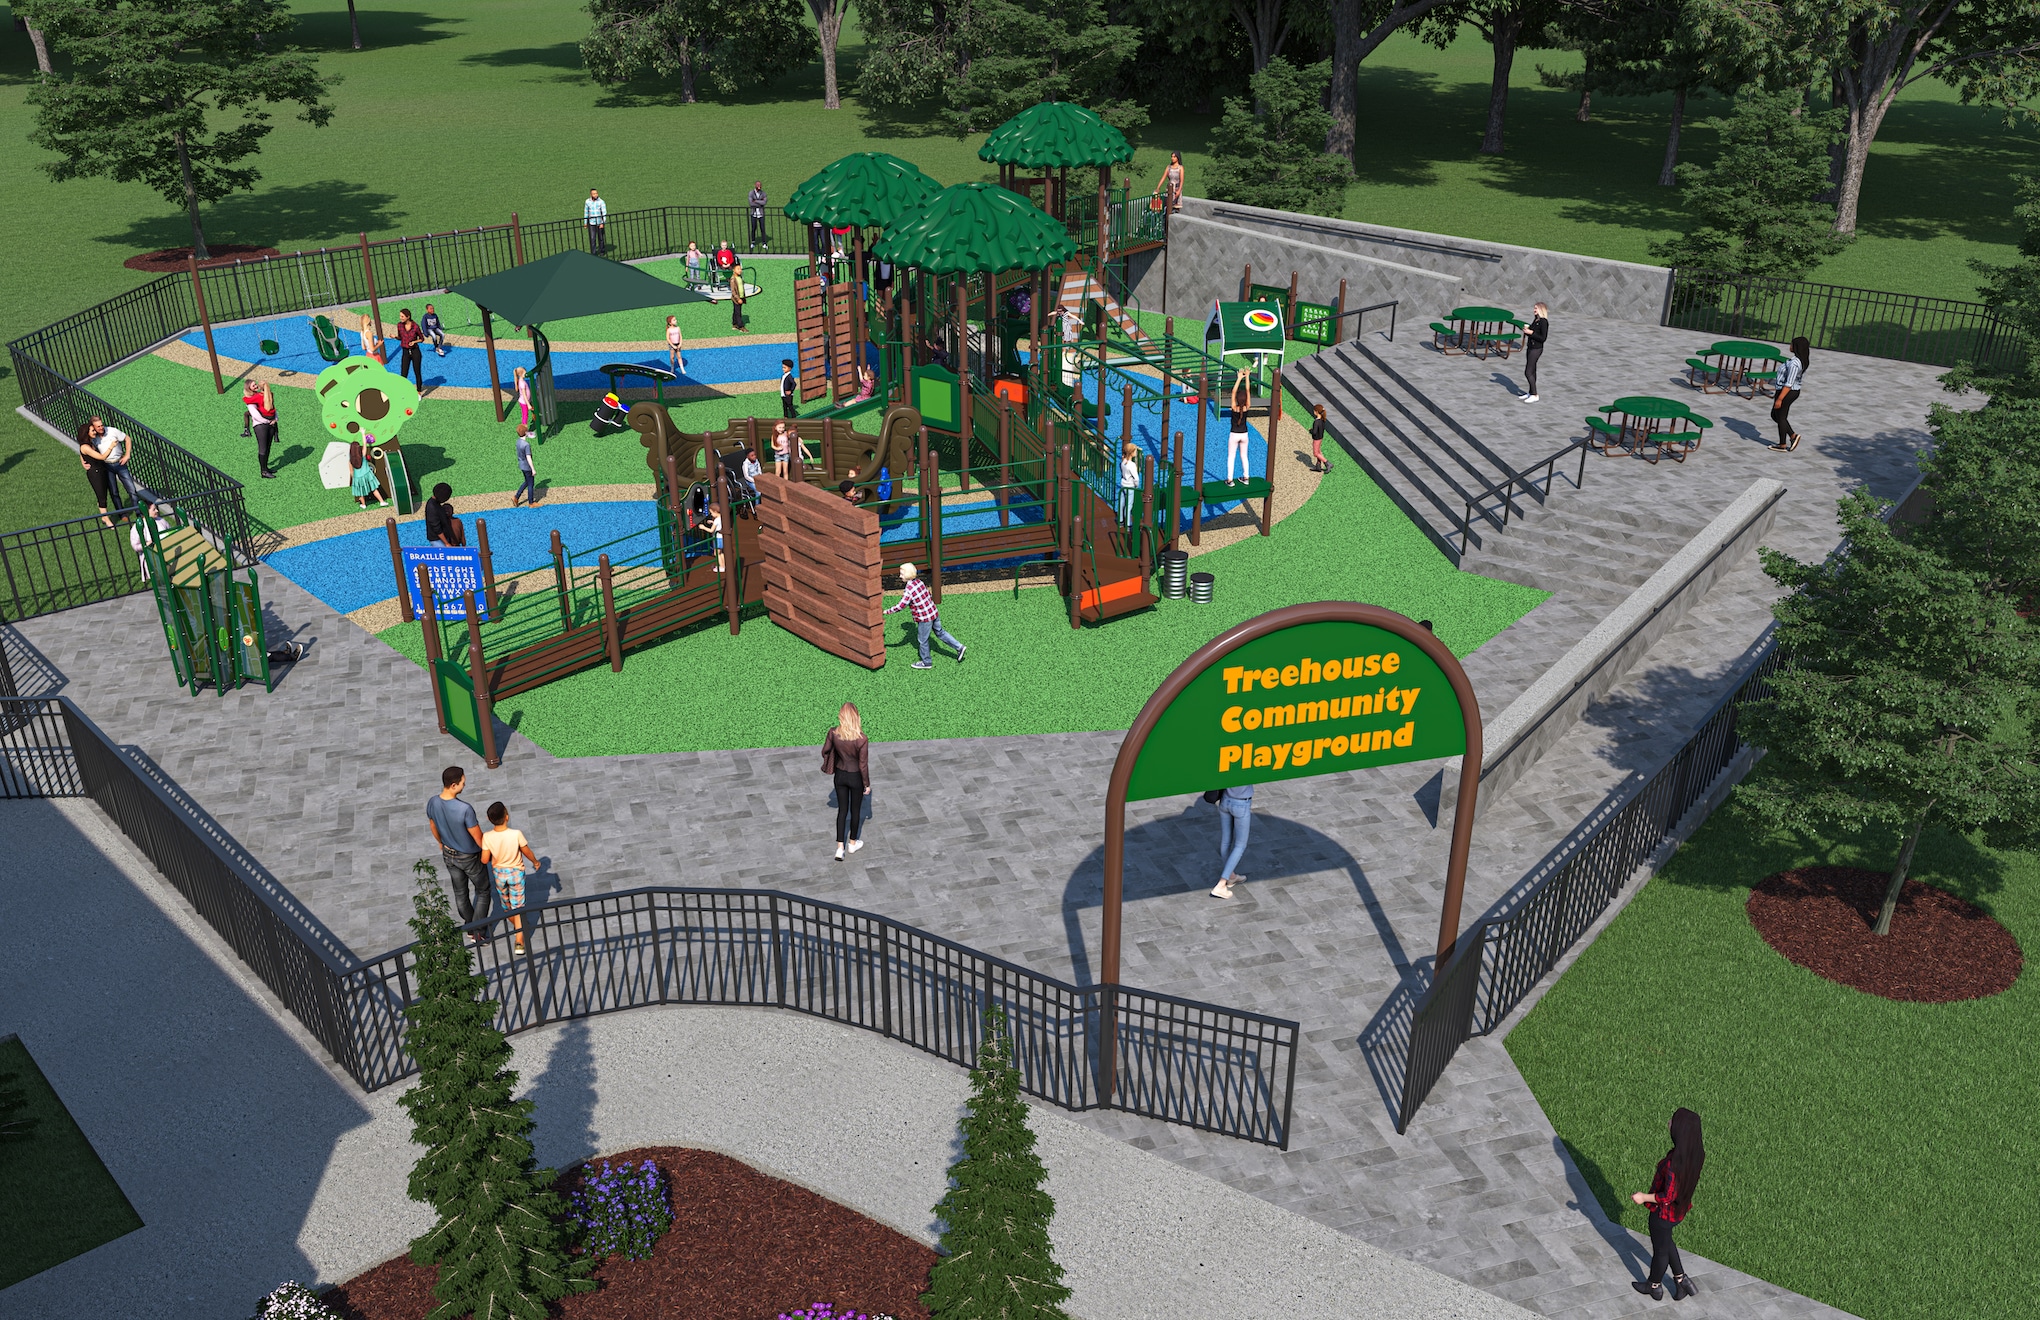 Treehouse Community Playground